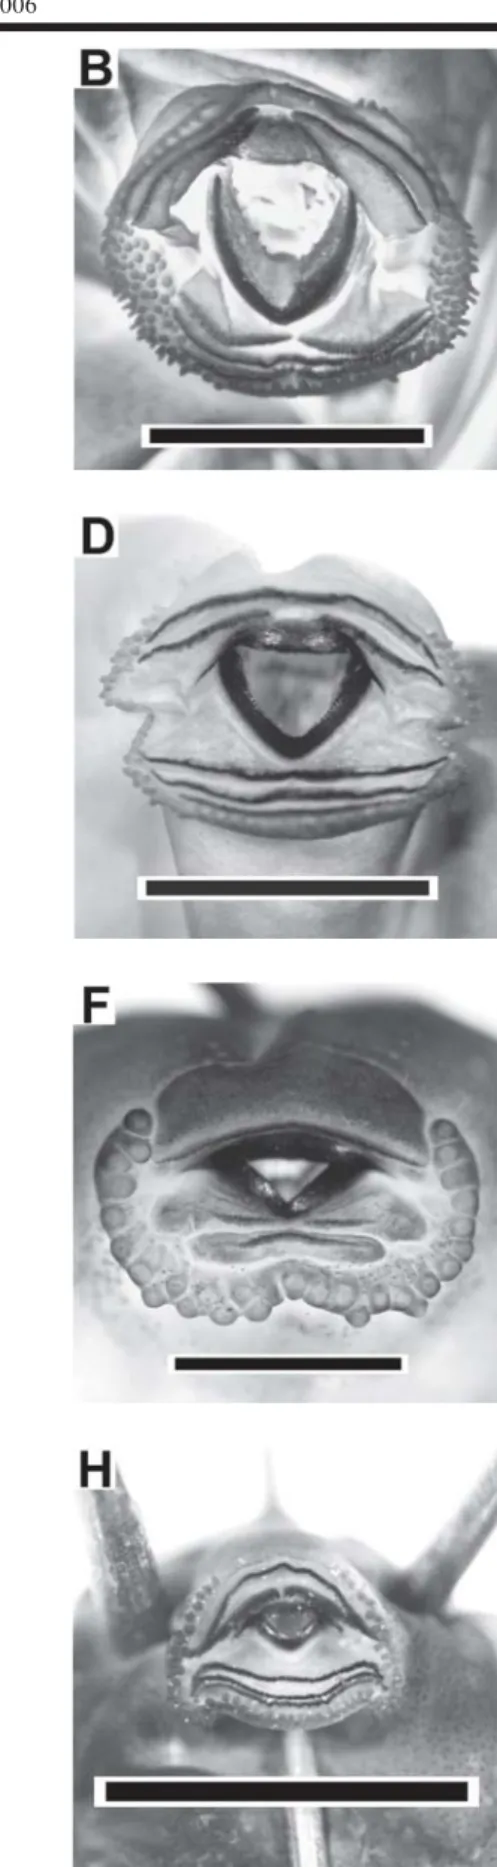 Figure 10. Tadpoles' oral apparatus of: A) S. fuscovarius, B) S. similis, C) Trachycephalus venulosus, D) Eupemphix nattereri, E) Leptodactylus fuscus, F) L